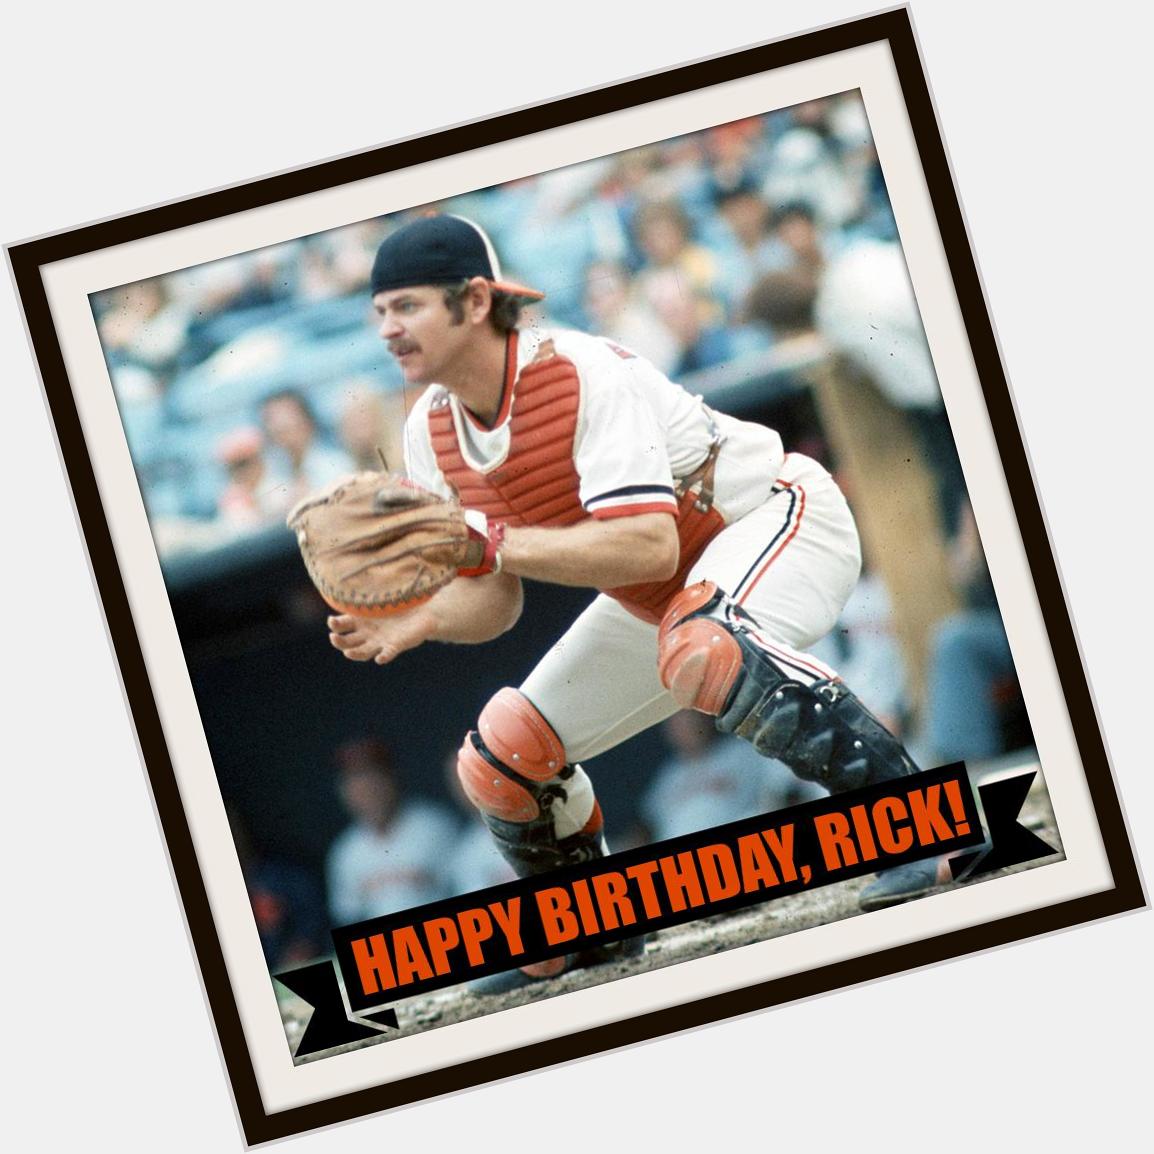 Happy Birthday to 1983 World Series MVP & current talent Rick Dempsey! 